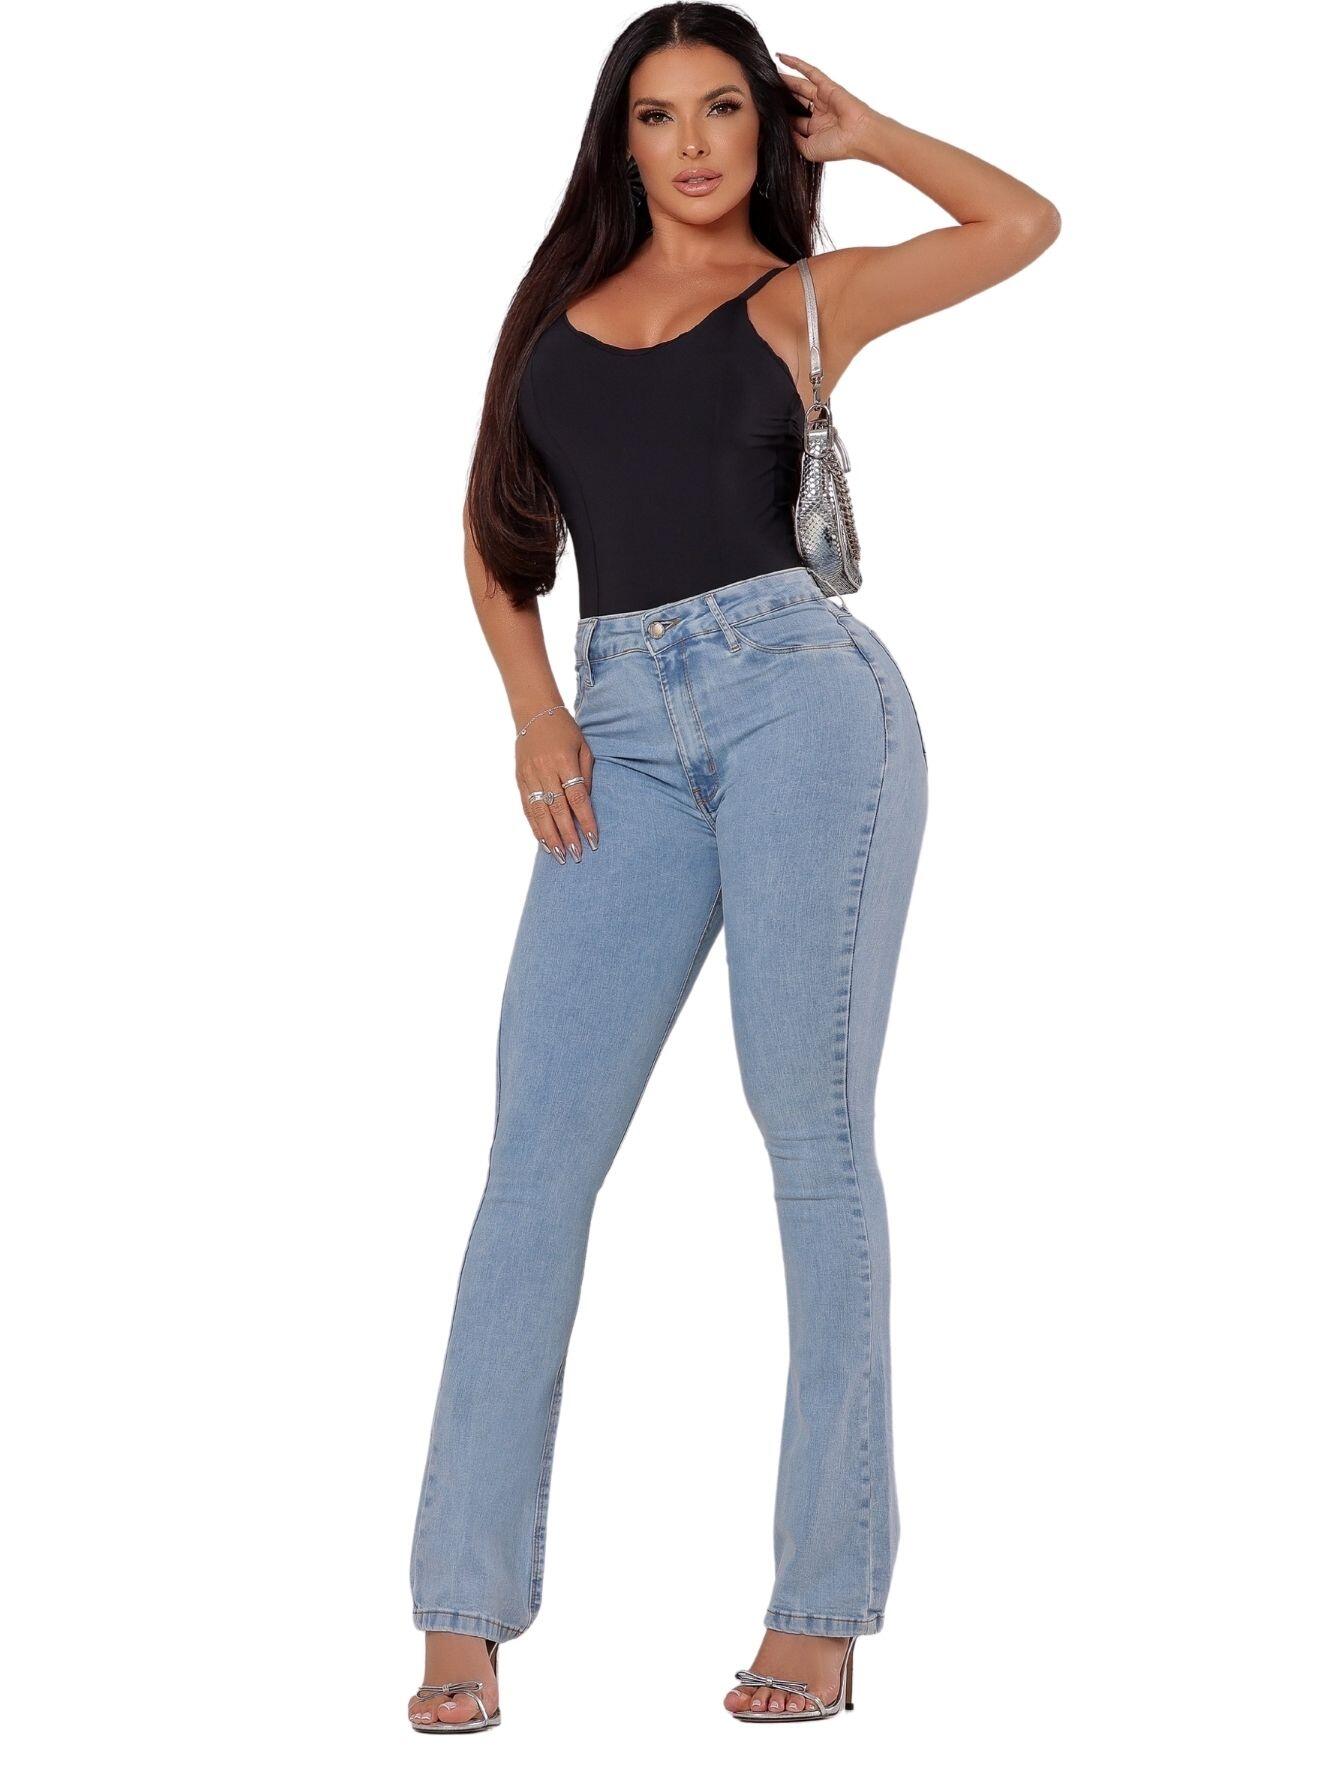 Calça jeans flare boot cut cintura alta clara levanta bumbum - HR